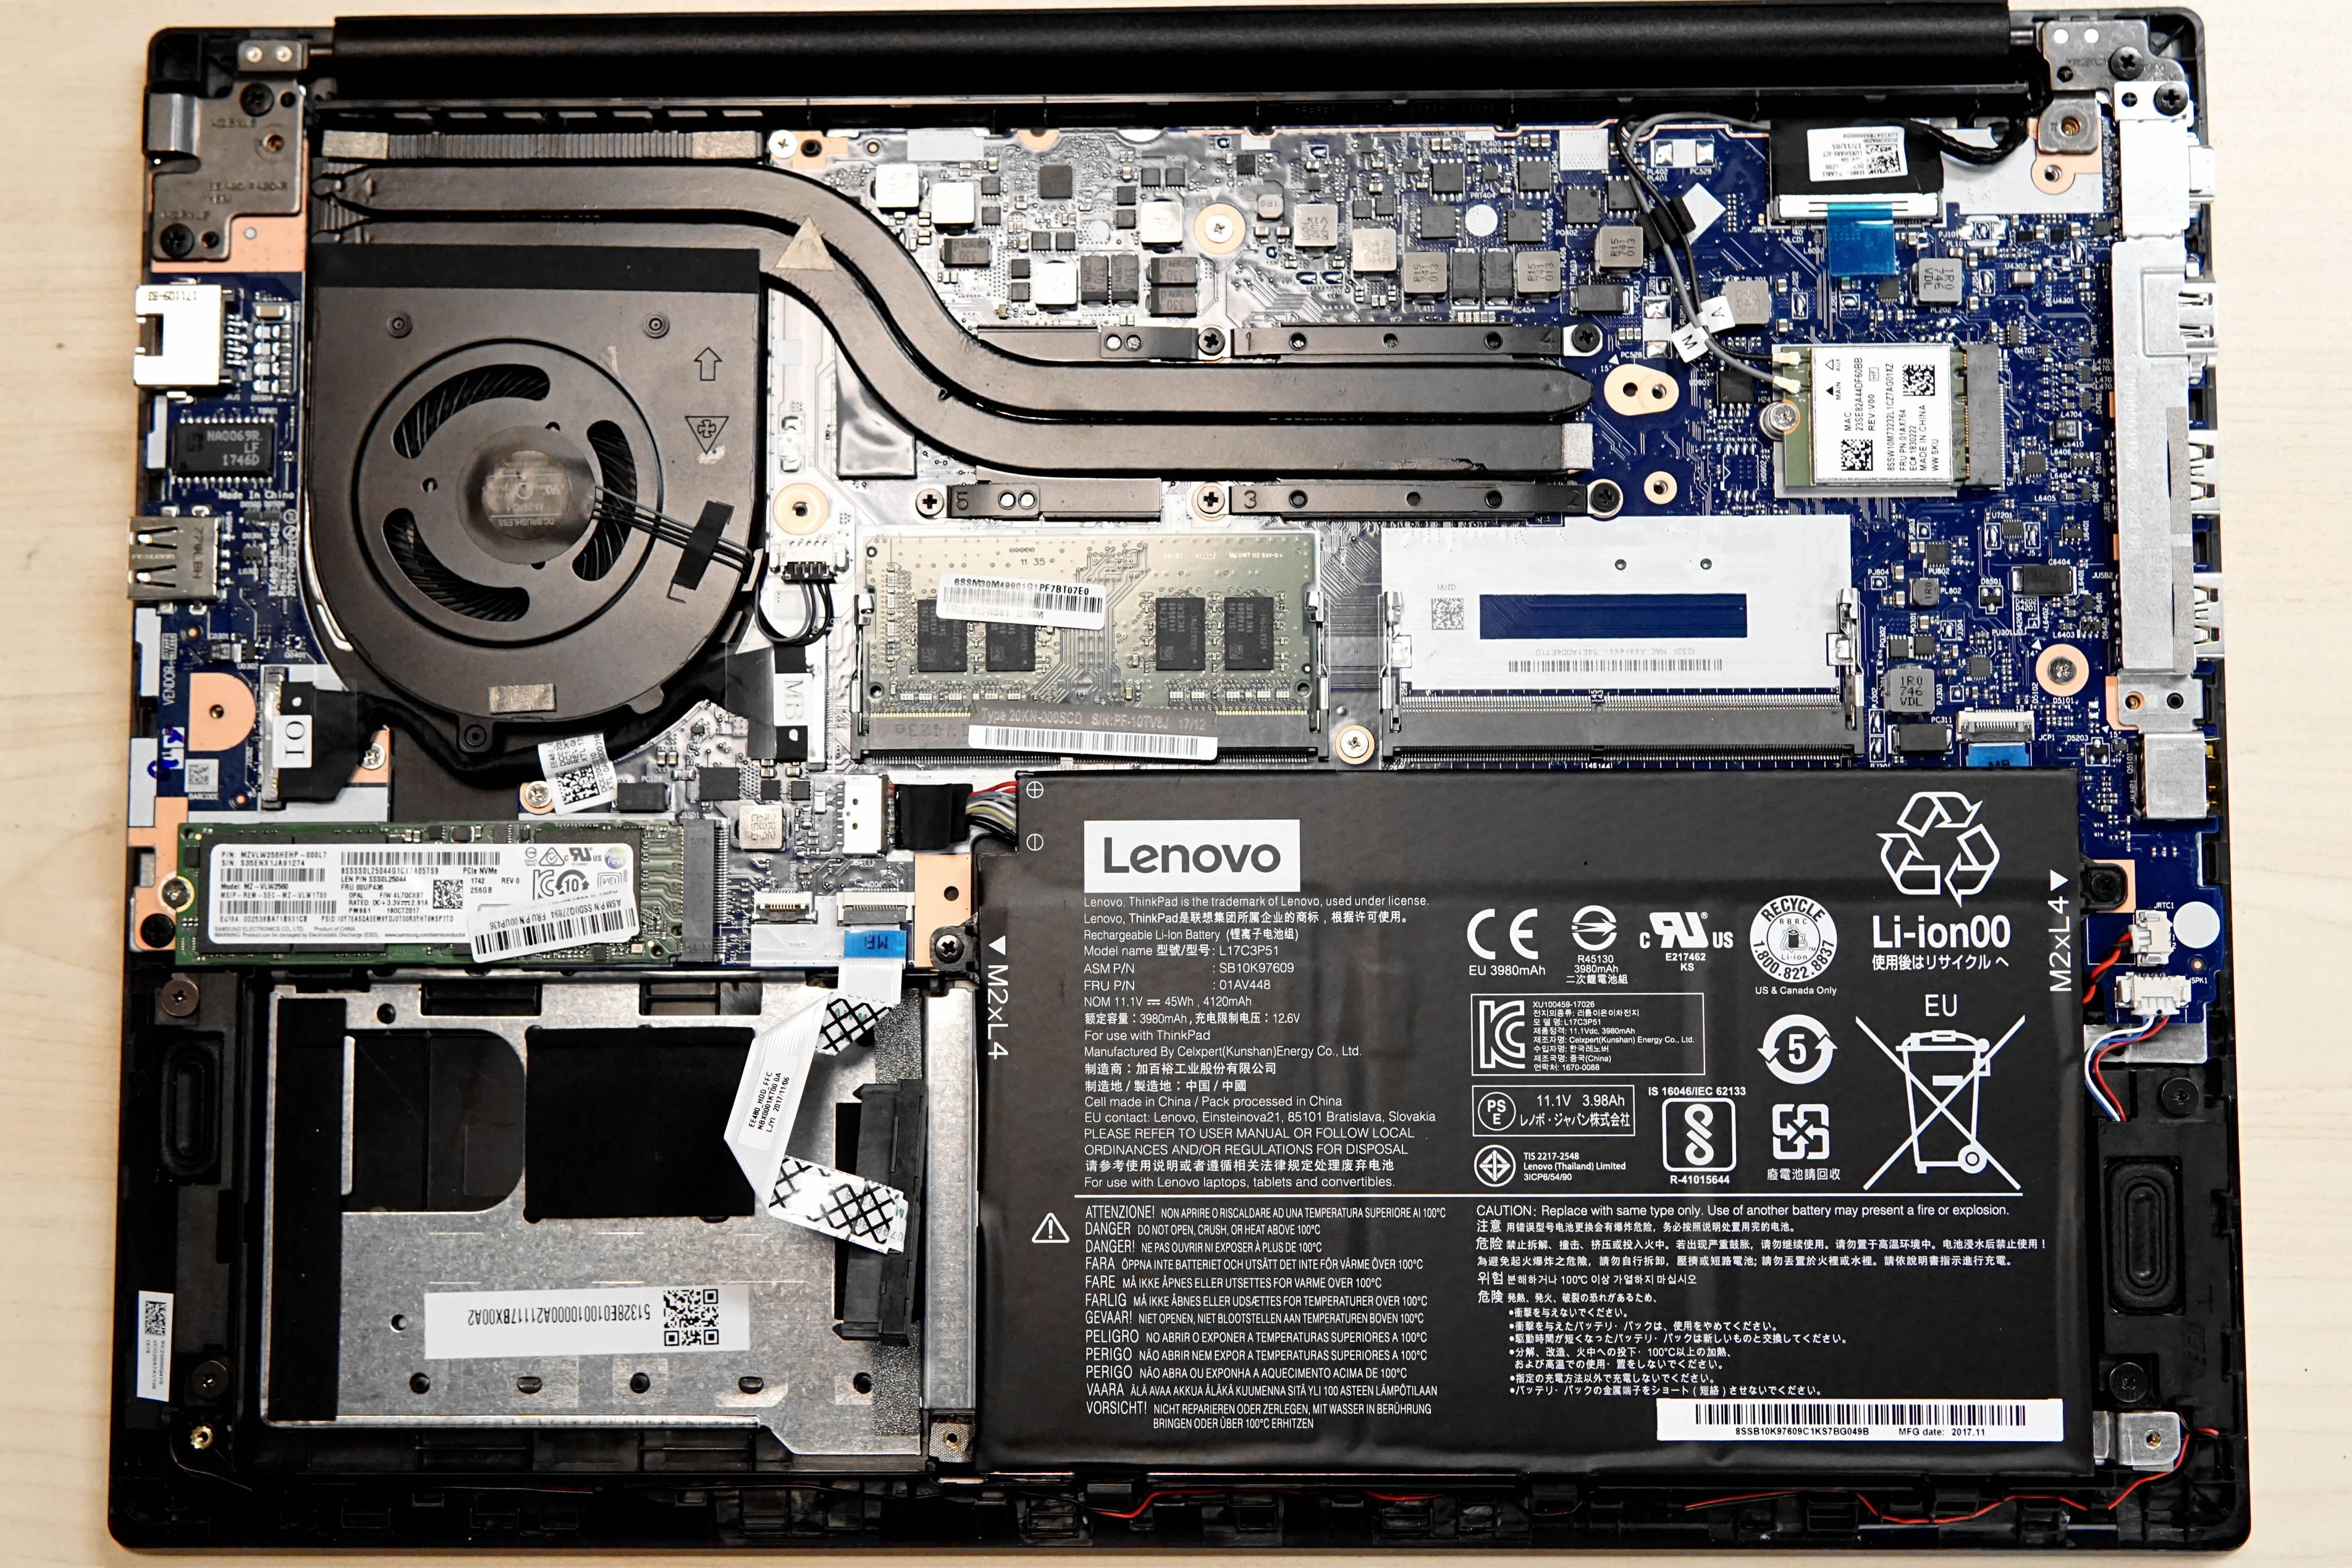 Lenovo ThinkPad E480 Review - Laptopmain.com